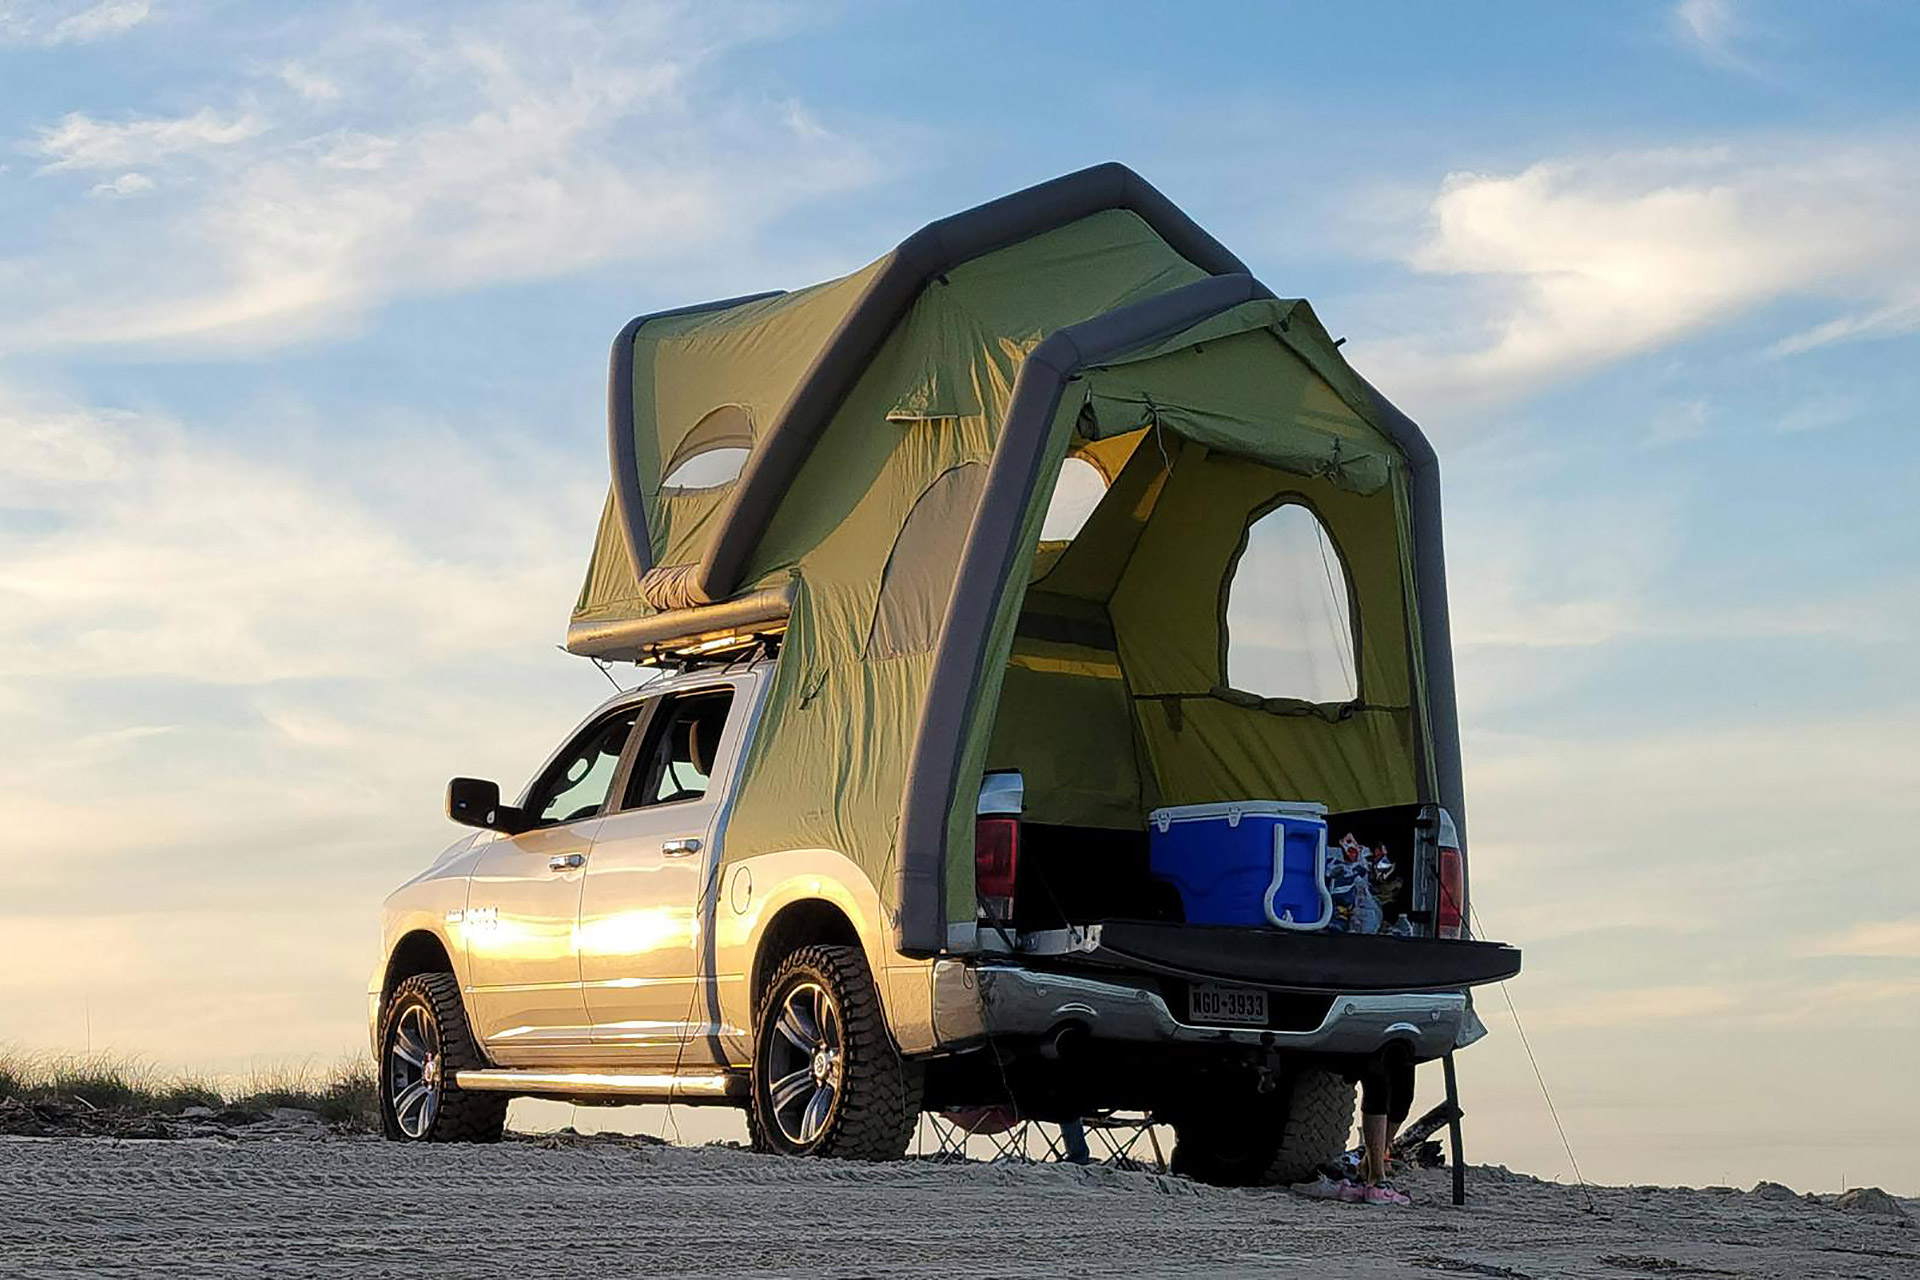 Vw Inflatable Rooftop Tent Advanture Magazine New Van Camping Tent | My ...